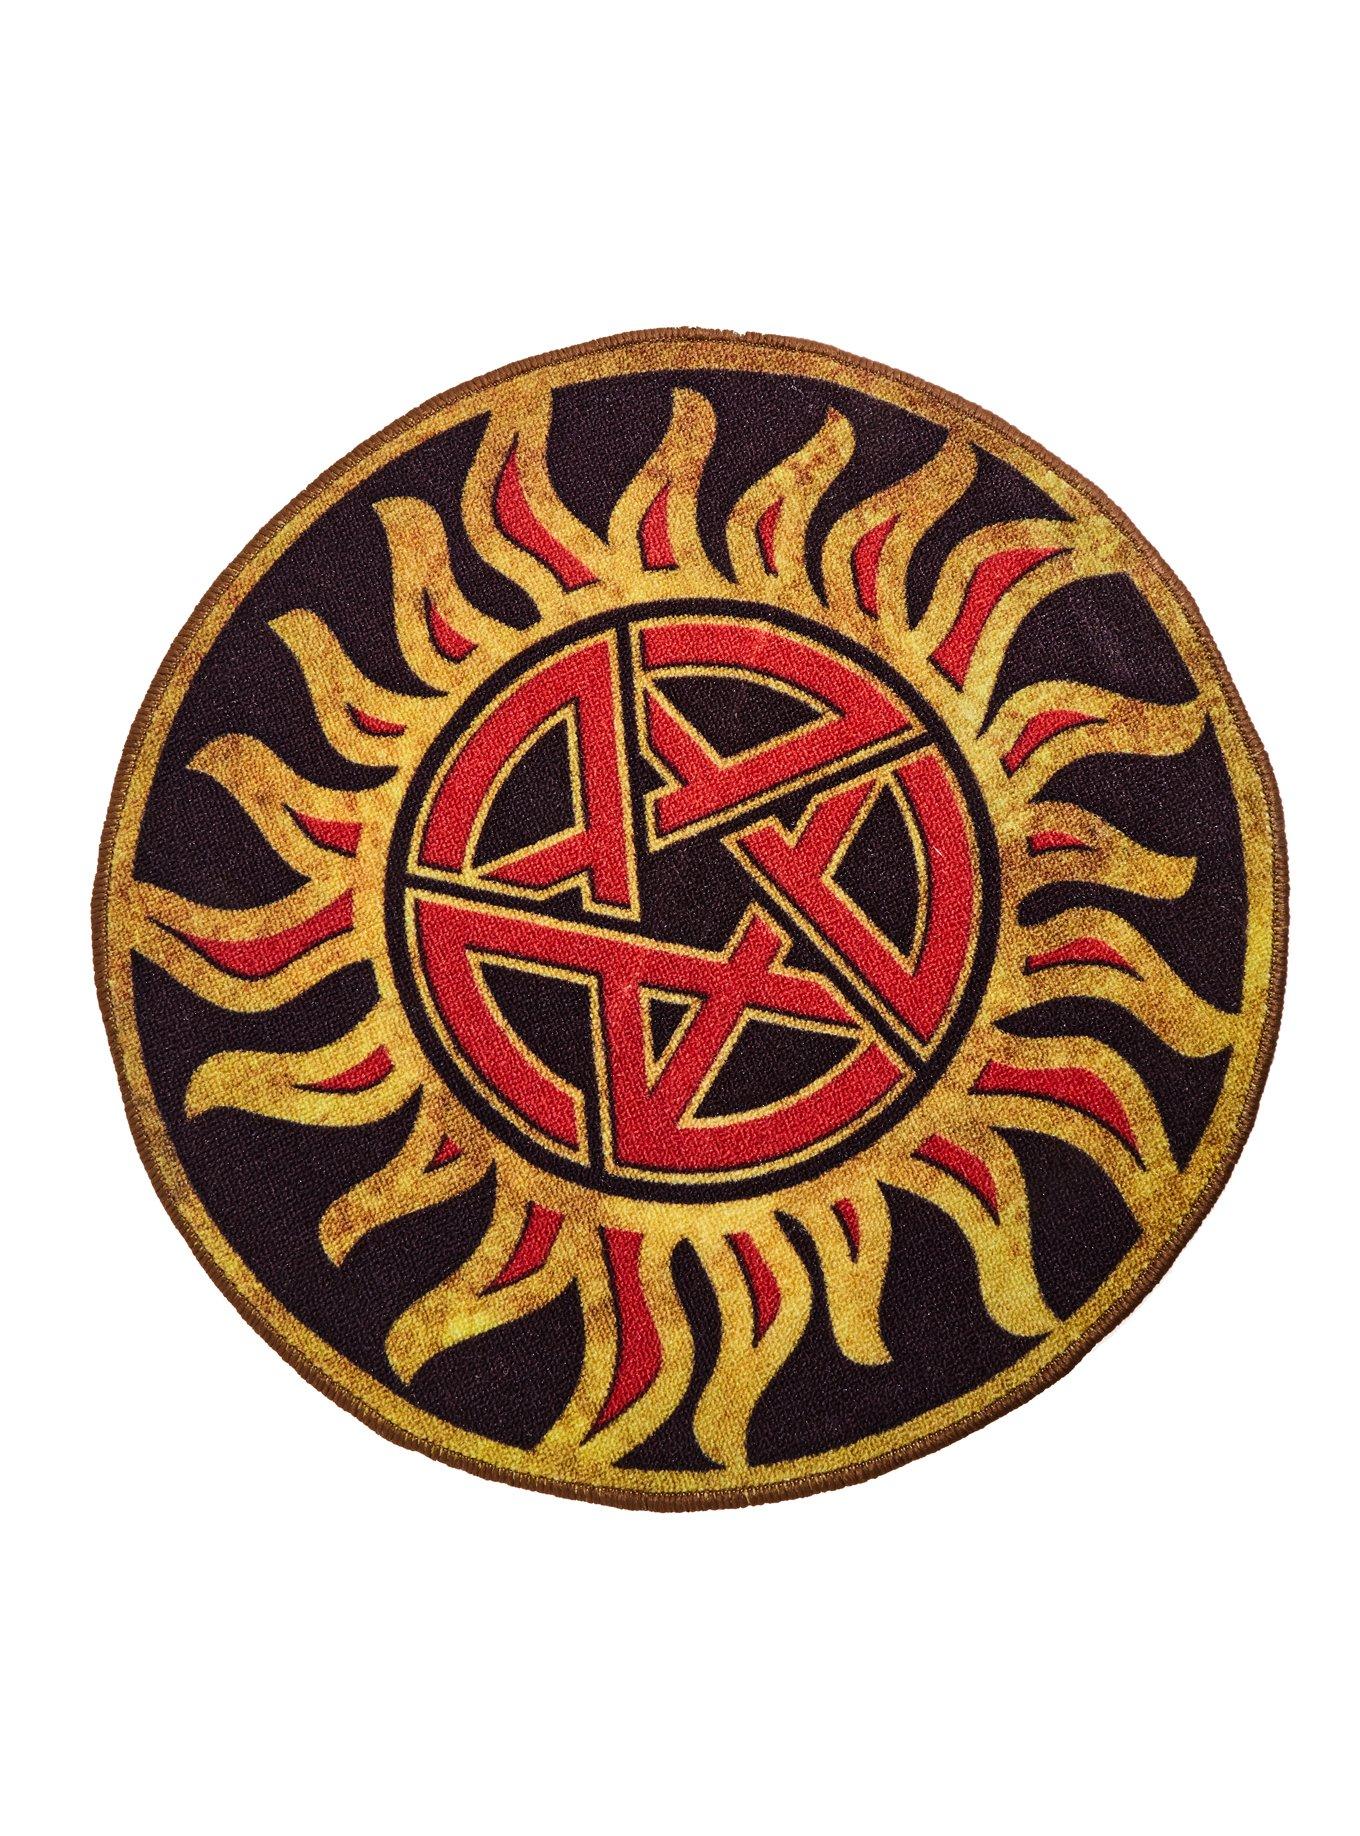 Supernatural Anti-Possession Symbol Doormat, , hi-res